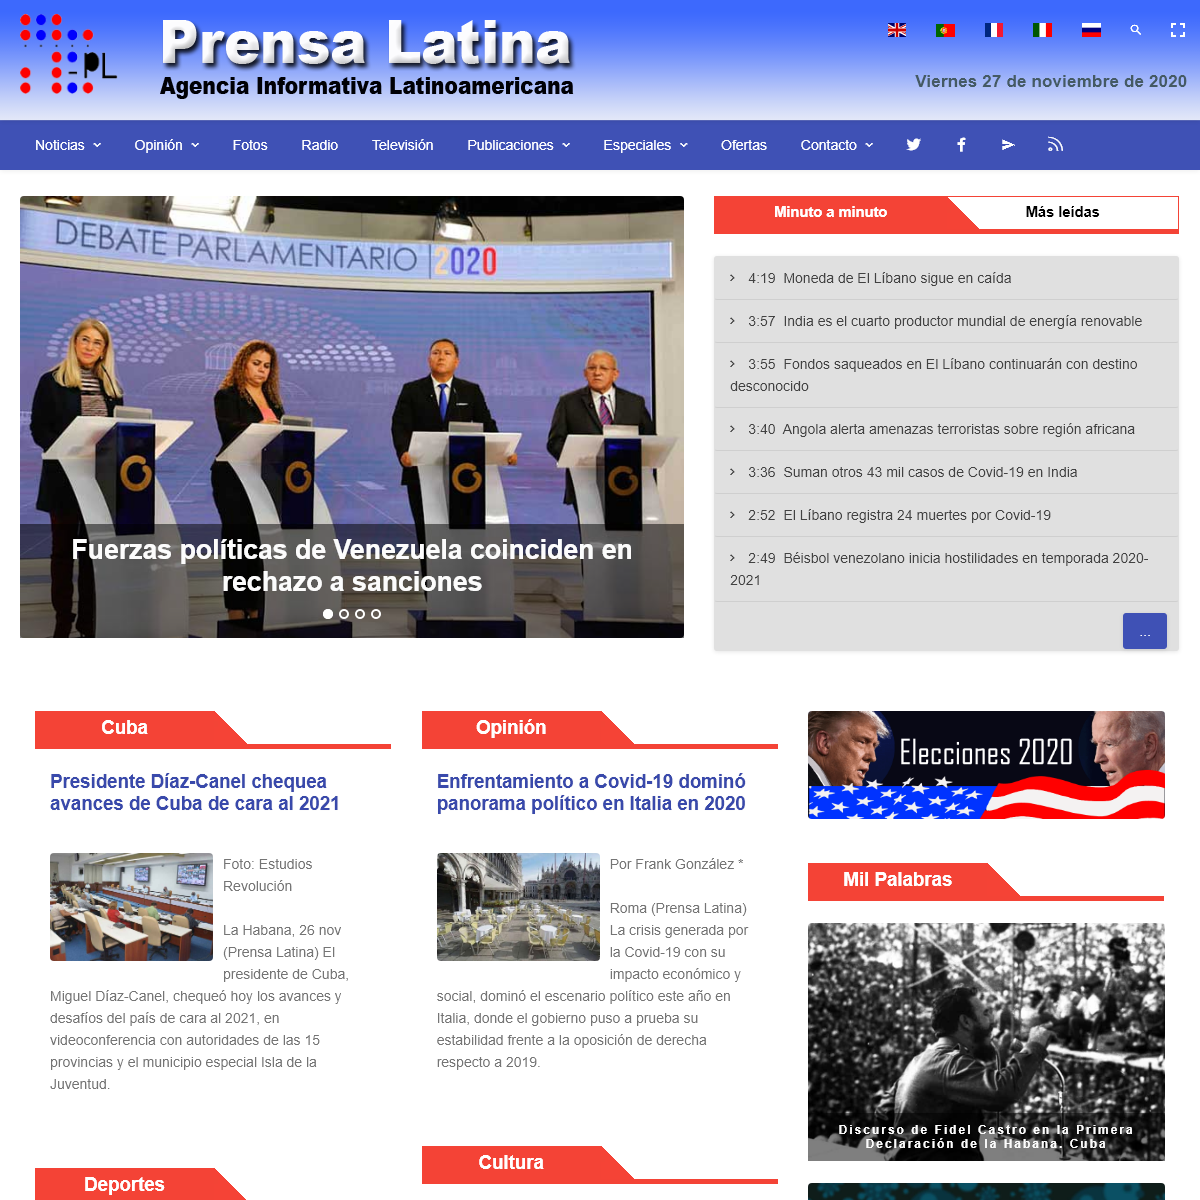 A complete backup of prensa-latina.cu